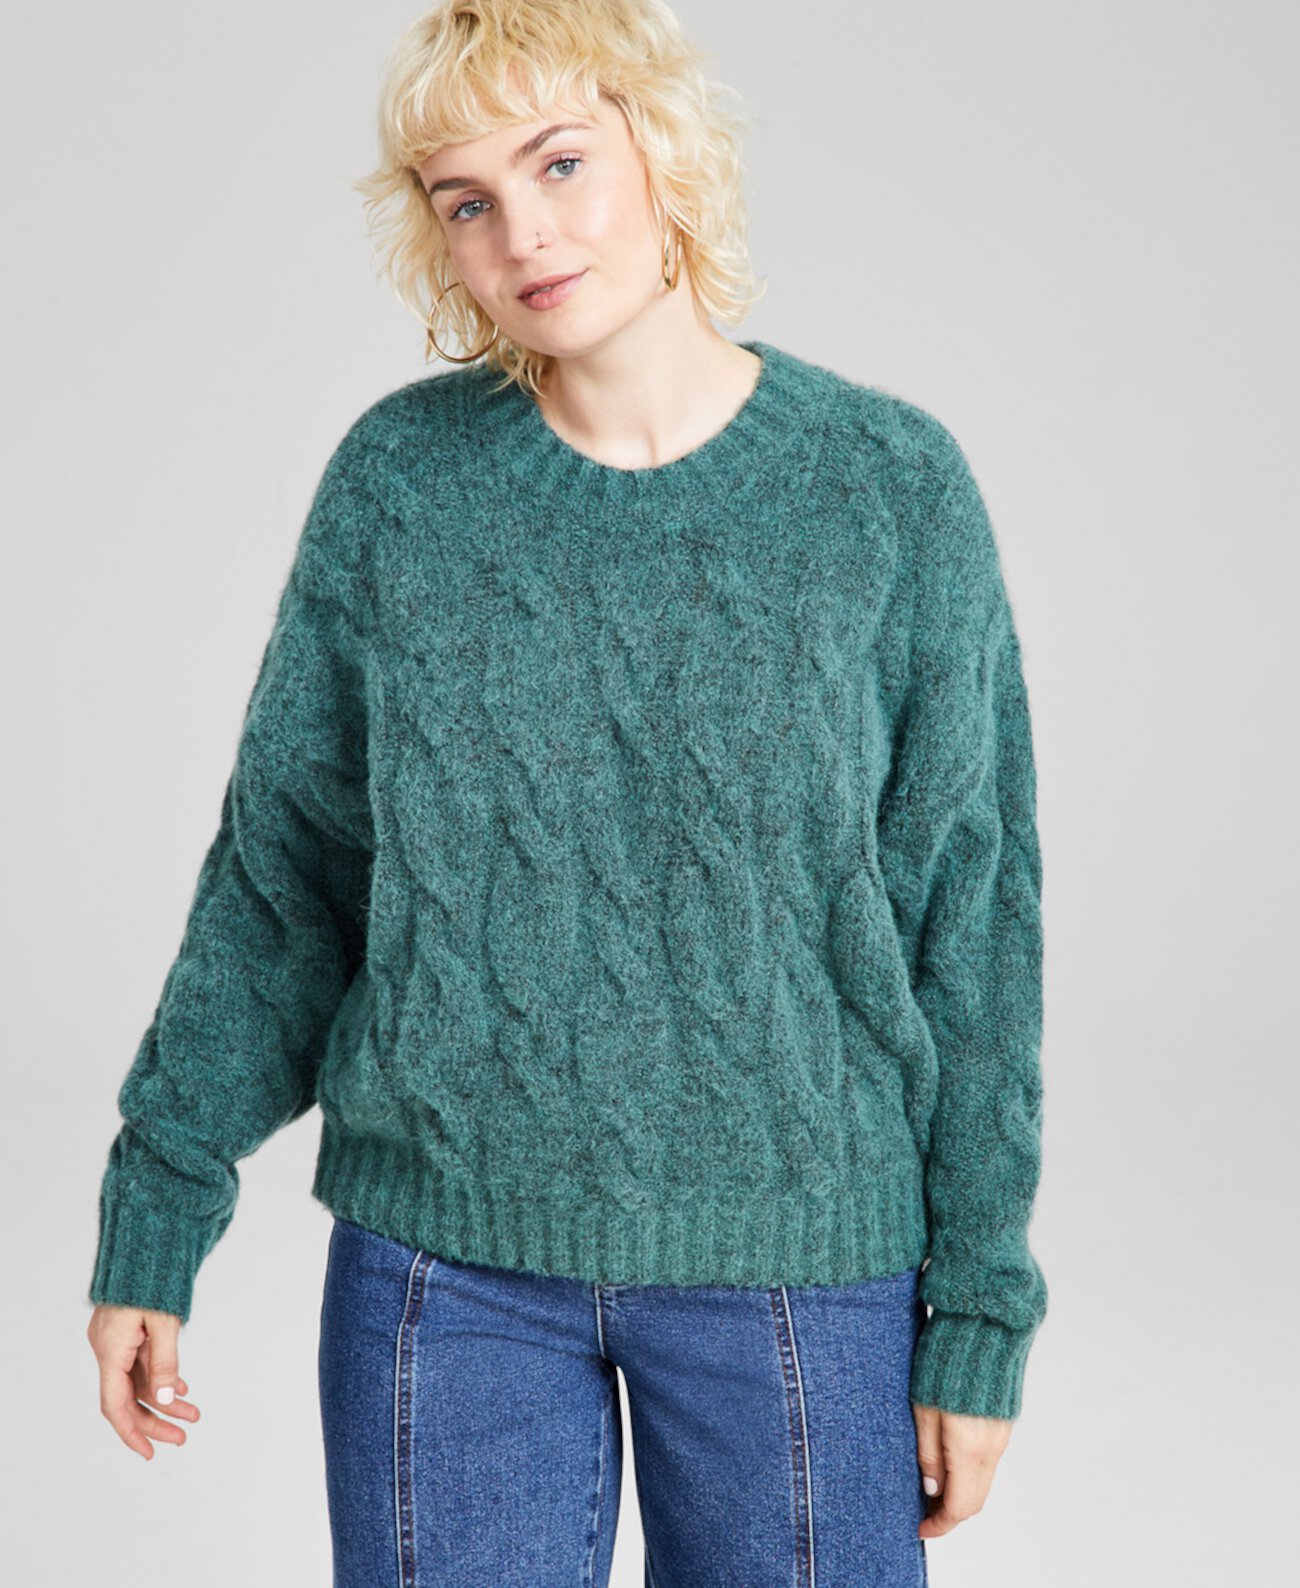 Женский вязаный свитер And Now This, созданный для Macy's And Now This